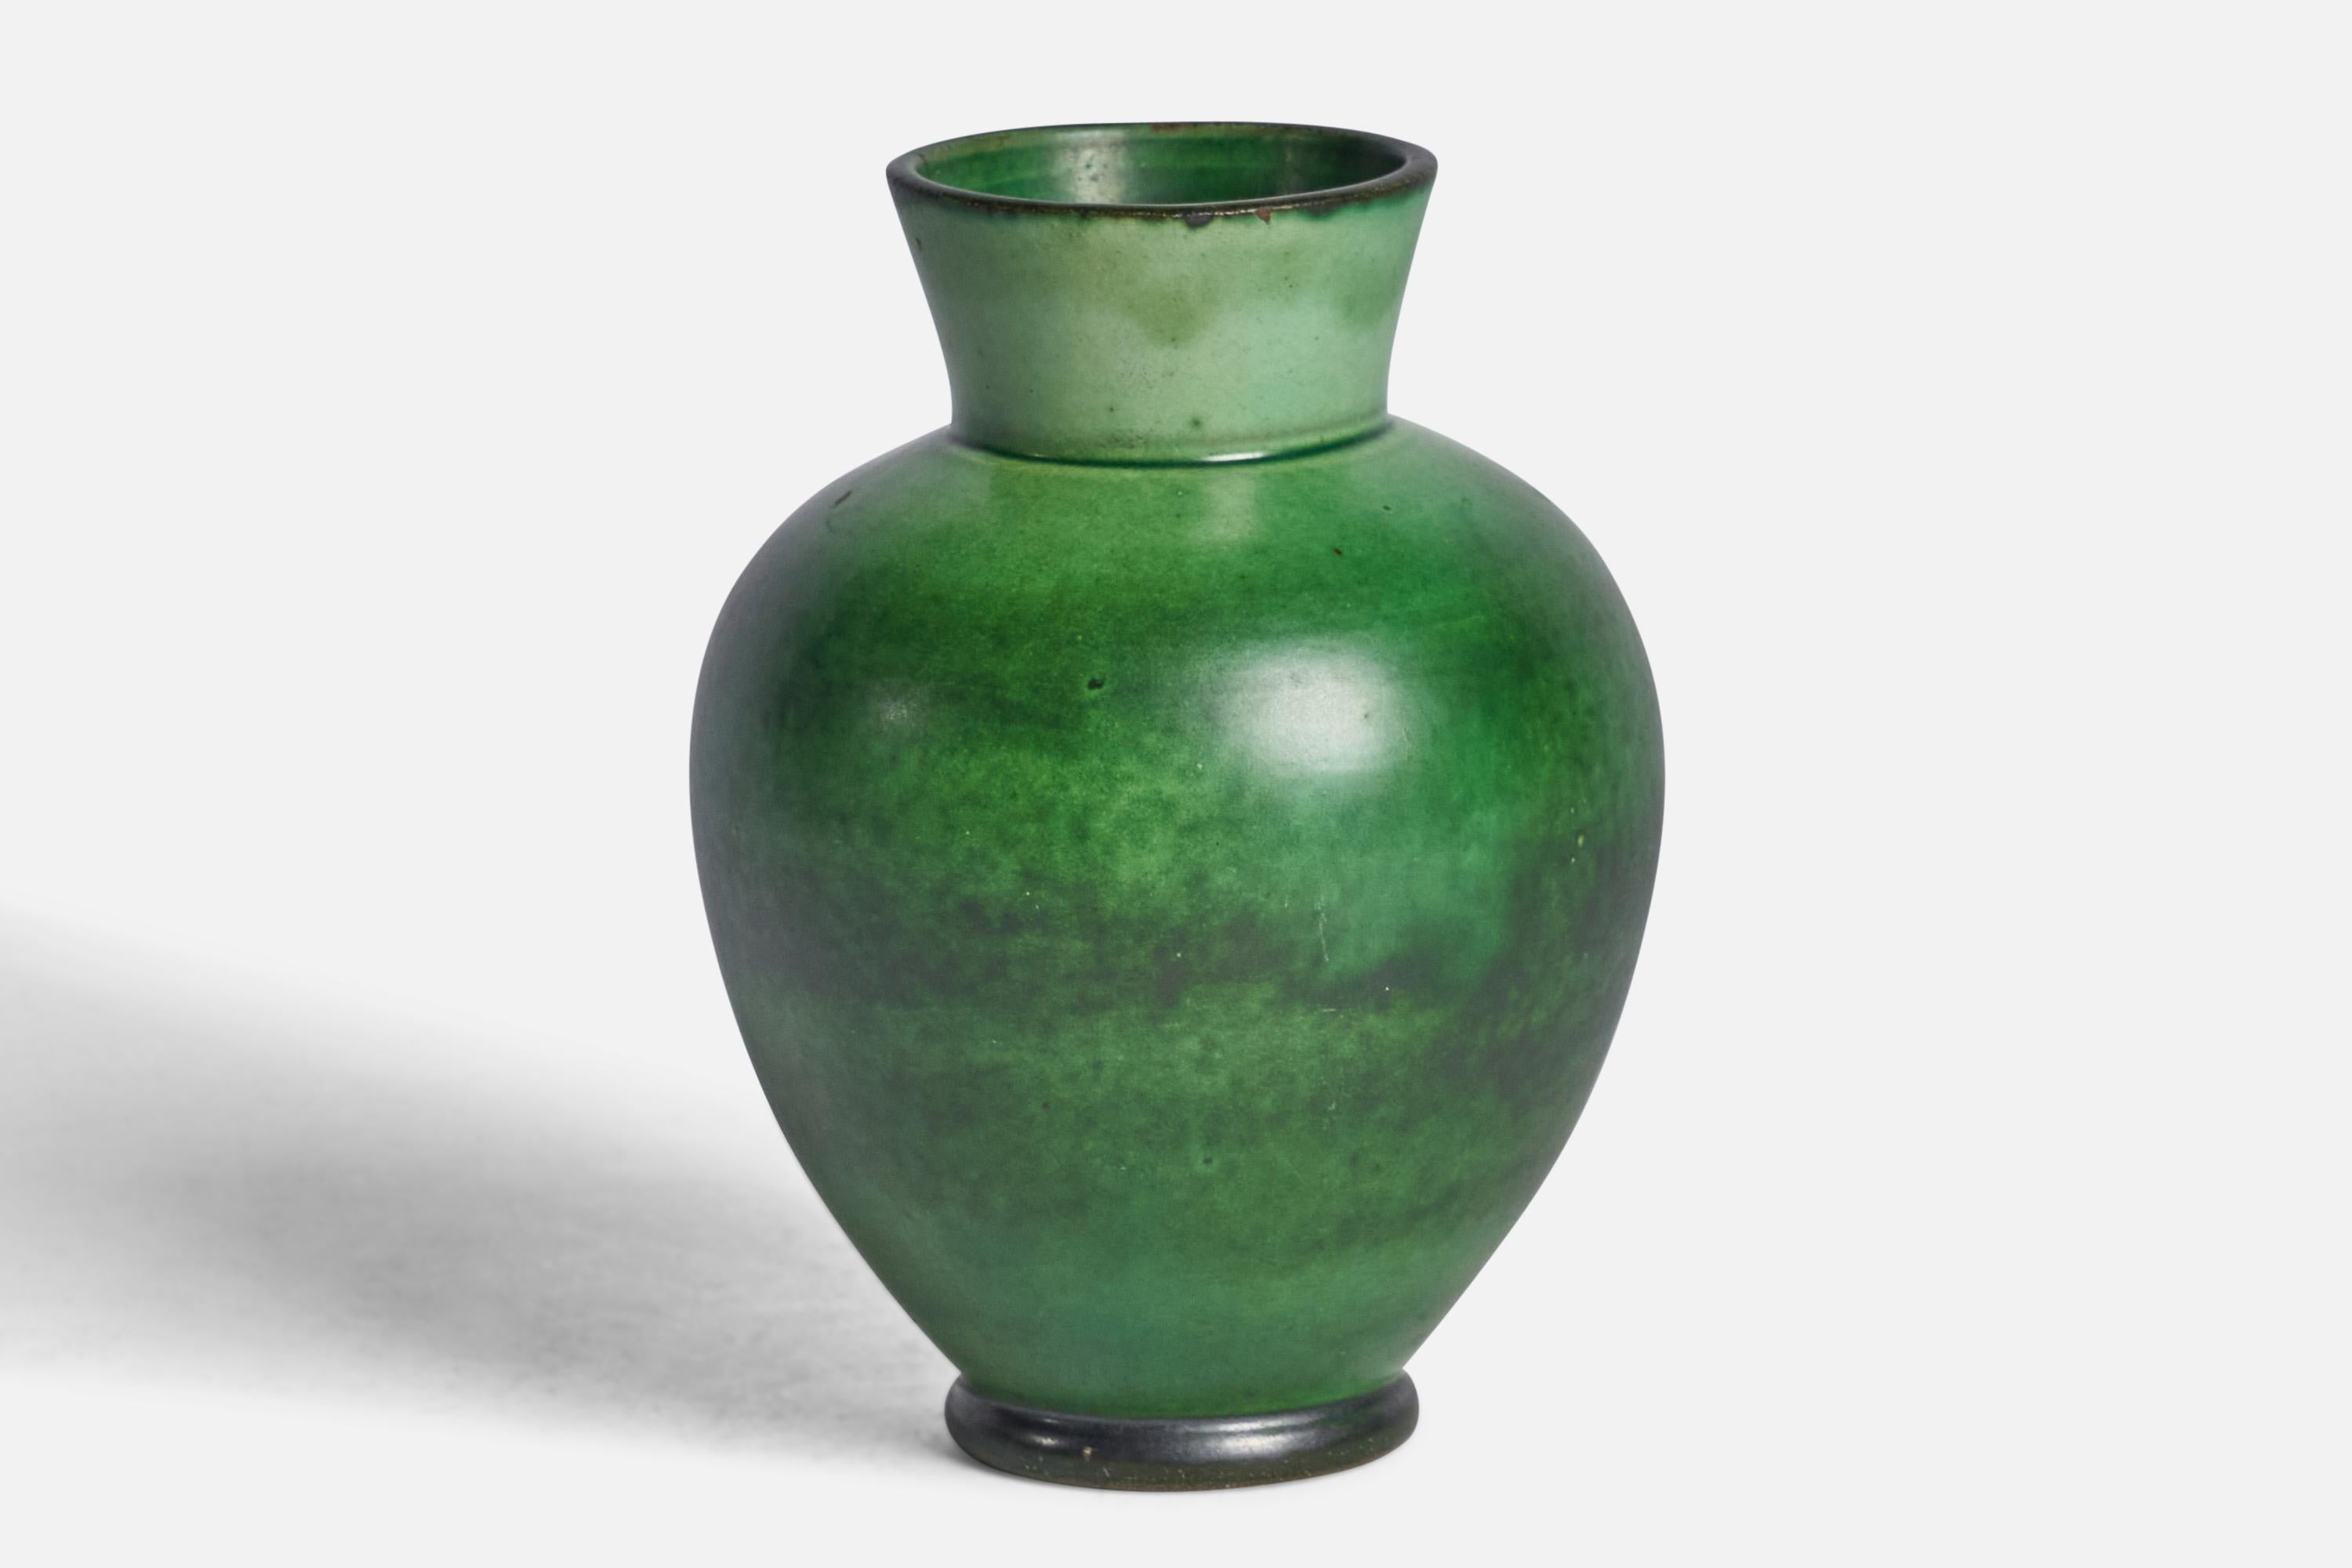 A green-glazed earthenware vase by Nittsjö, Sweden, c. 1930s.